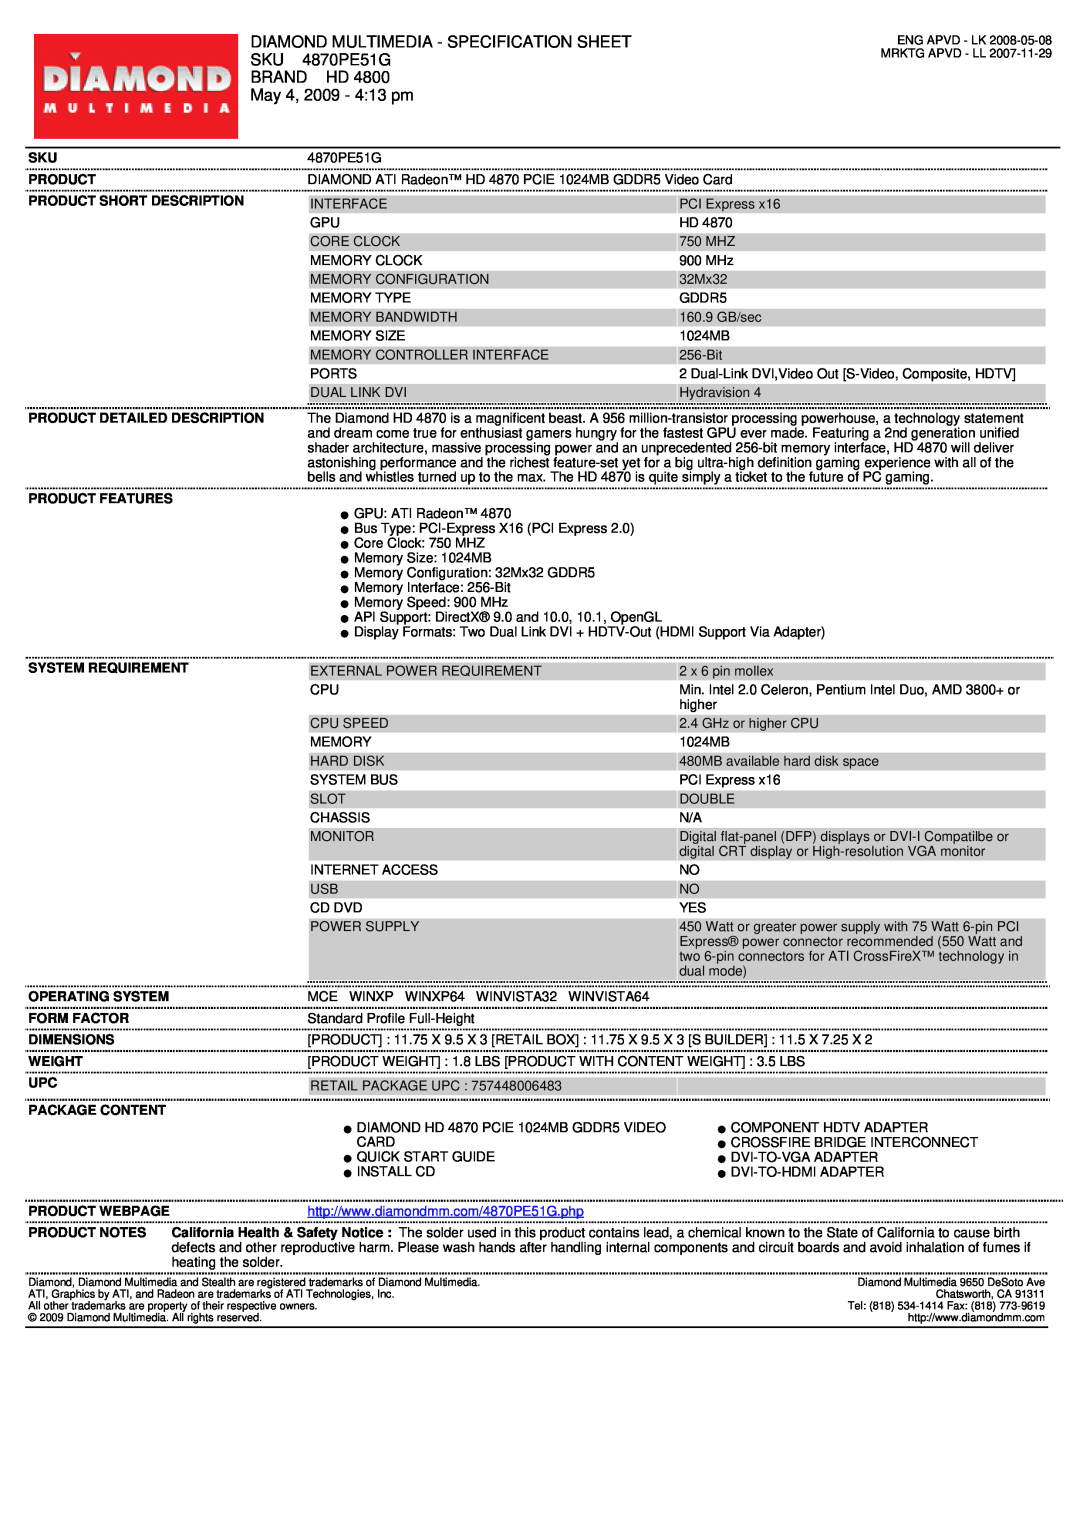 Diamond Multimedia SKU 4870PE51G specifications Diamond Multimedia - Specification Sheet, Brand Hd, May 4, 2009 - 413 pm 